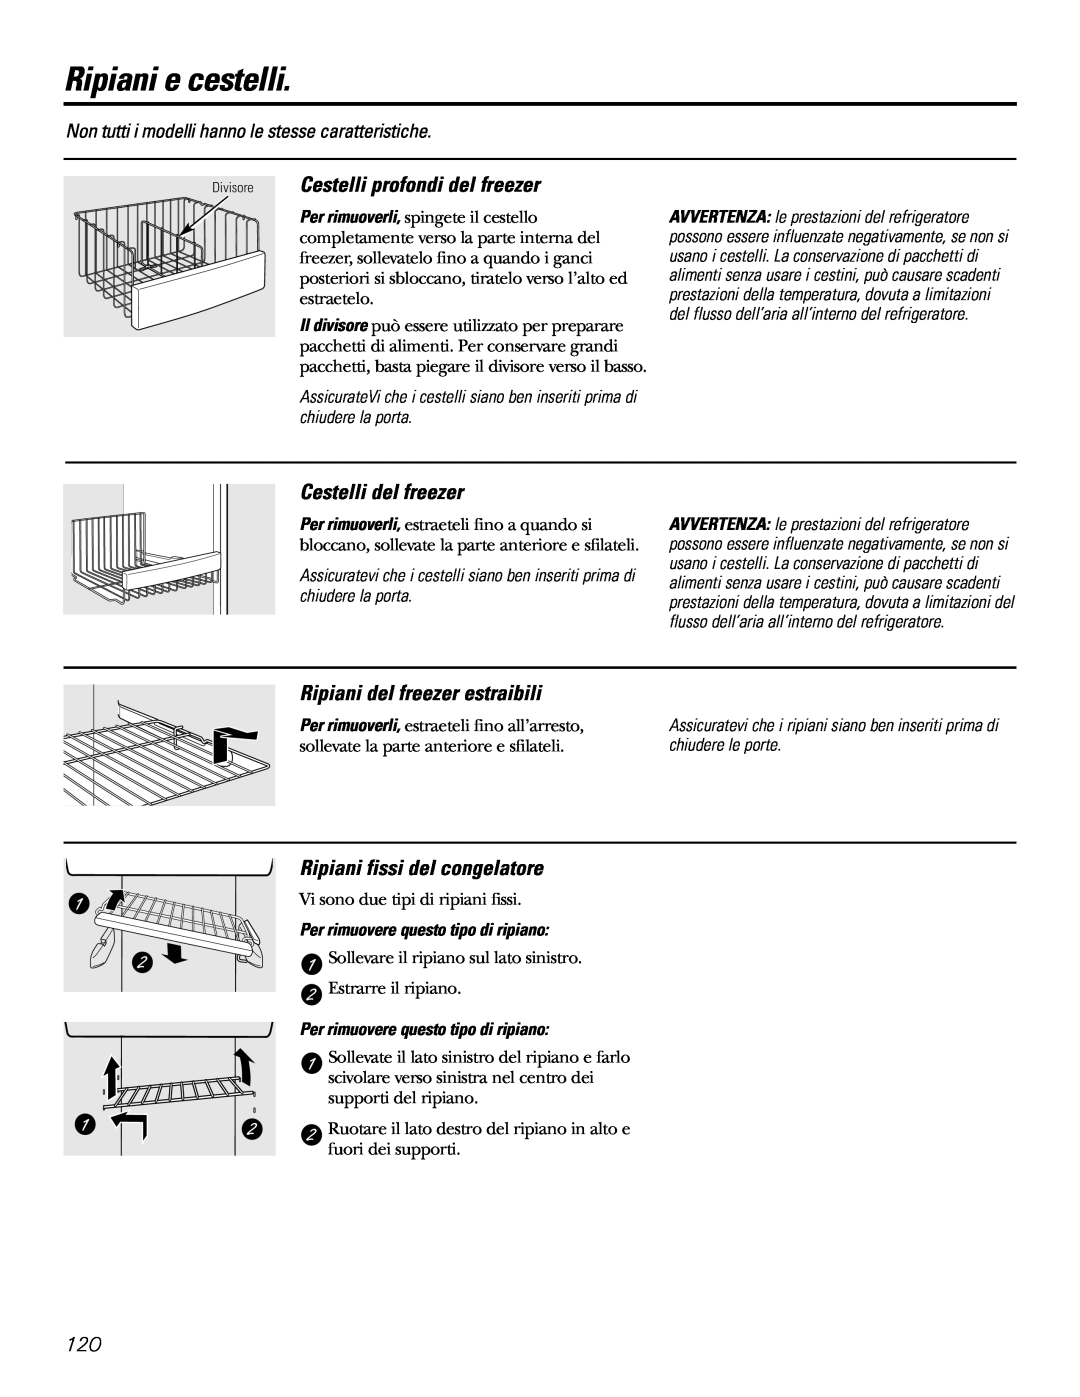 GE 200D2600P031 operating instructions Ripiani e cestelli, Divisore Cestelli profondi del freezer, Cestelli del freezer 